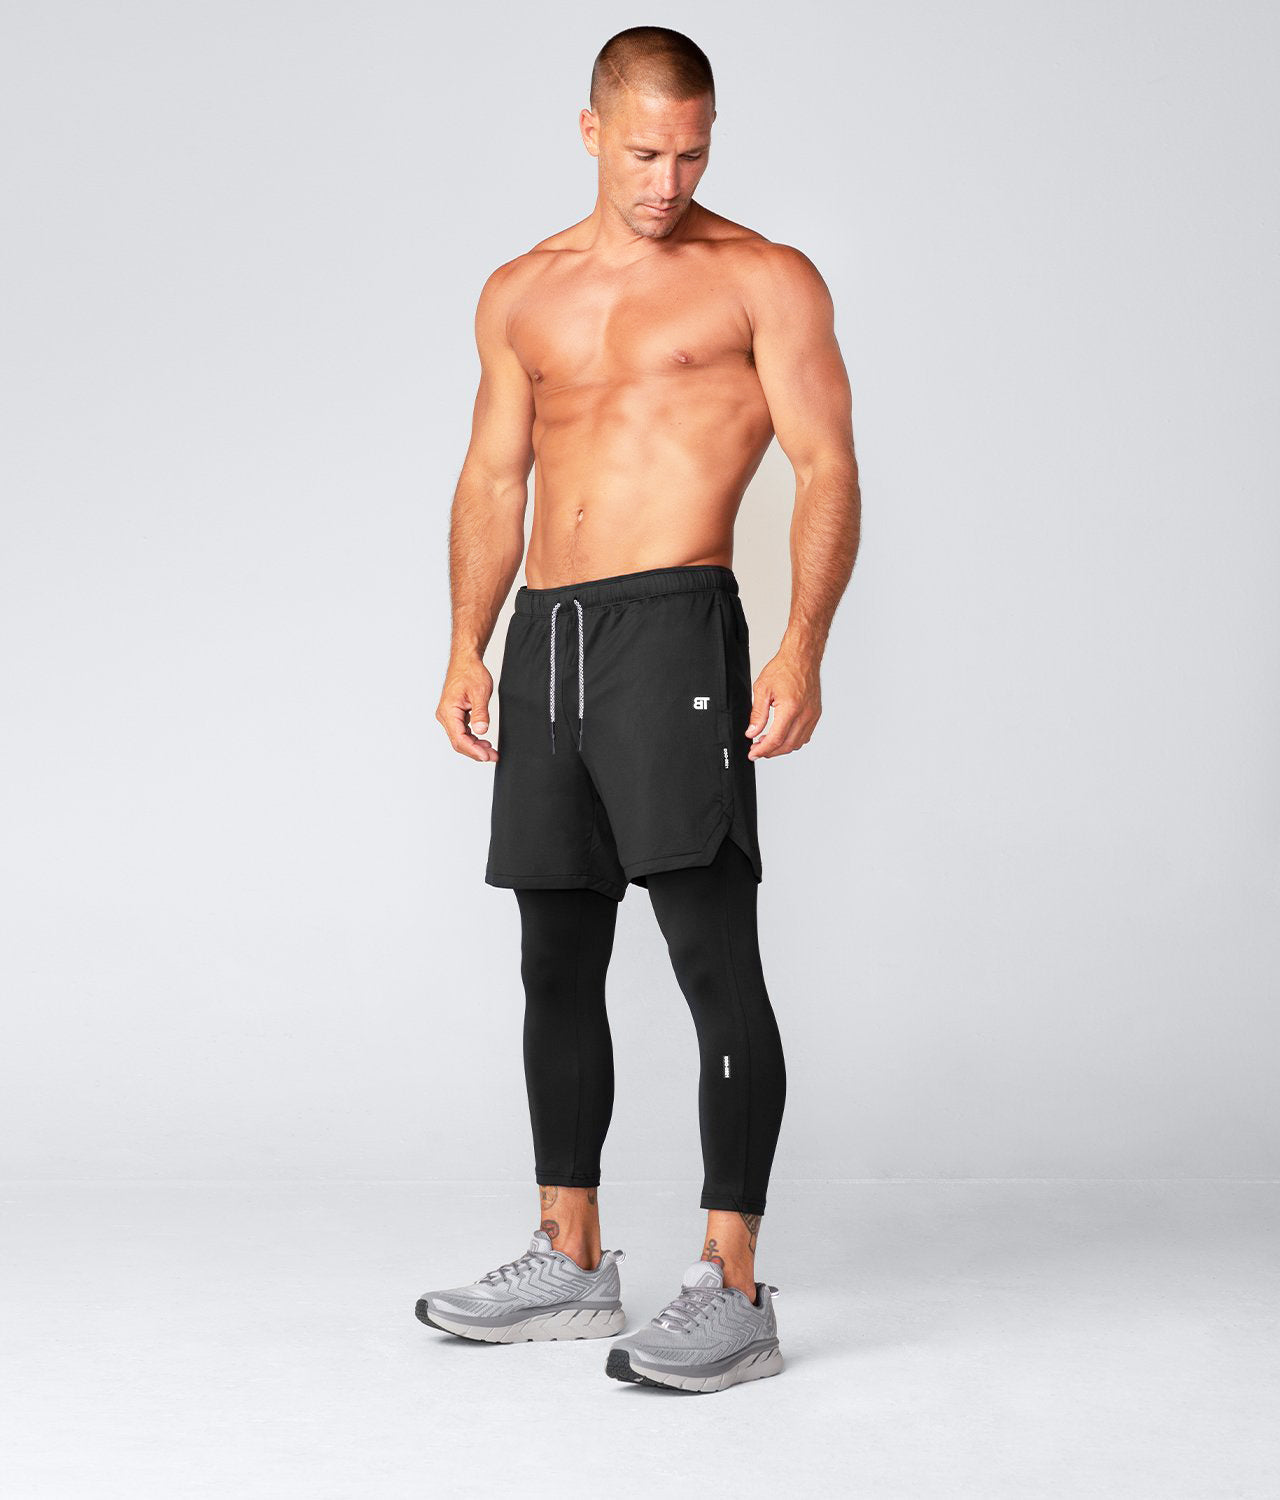 Pretty Comy Men Compression Short Running Tights Men's Quick Dry Gym  Fitness Sport Leggings Running Shorts Male Underwear Sport Shorts Black L 